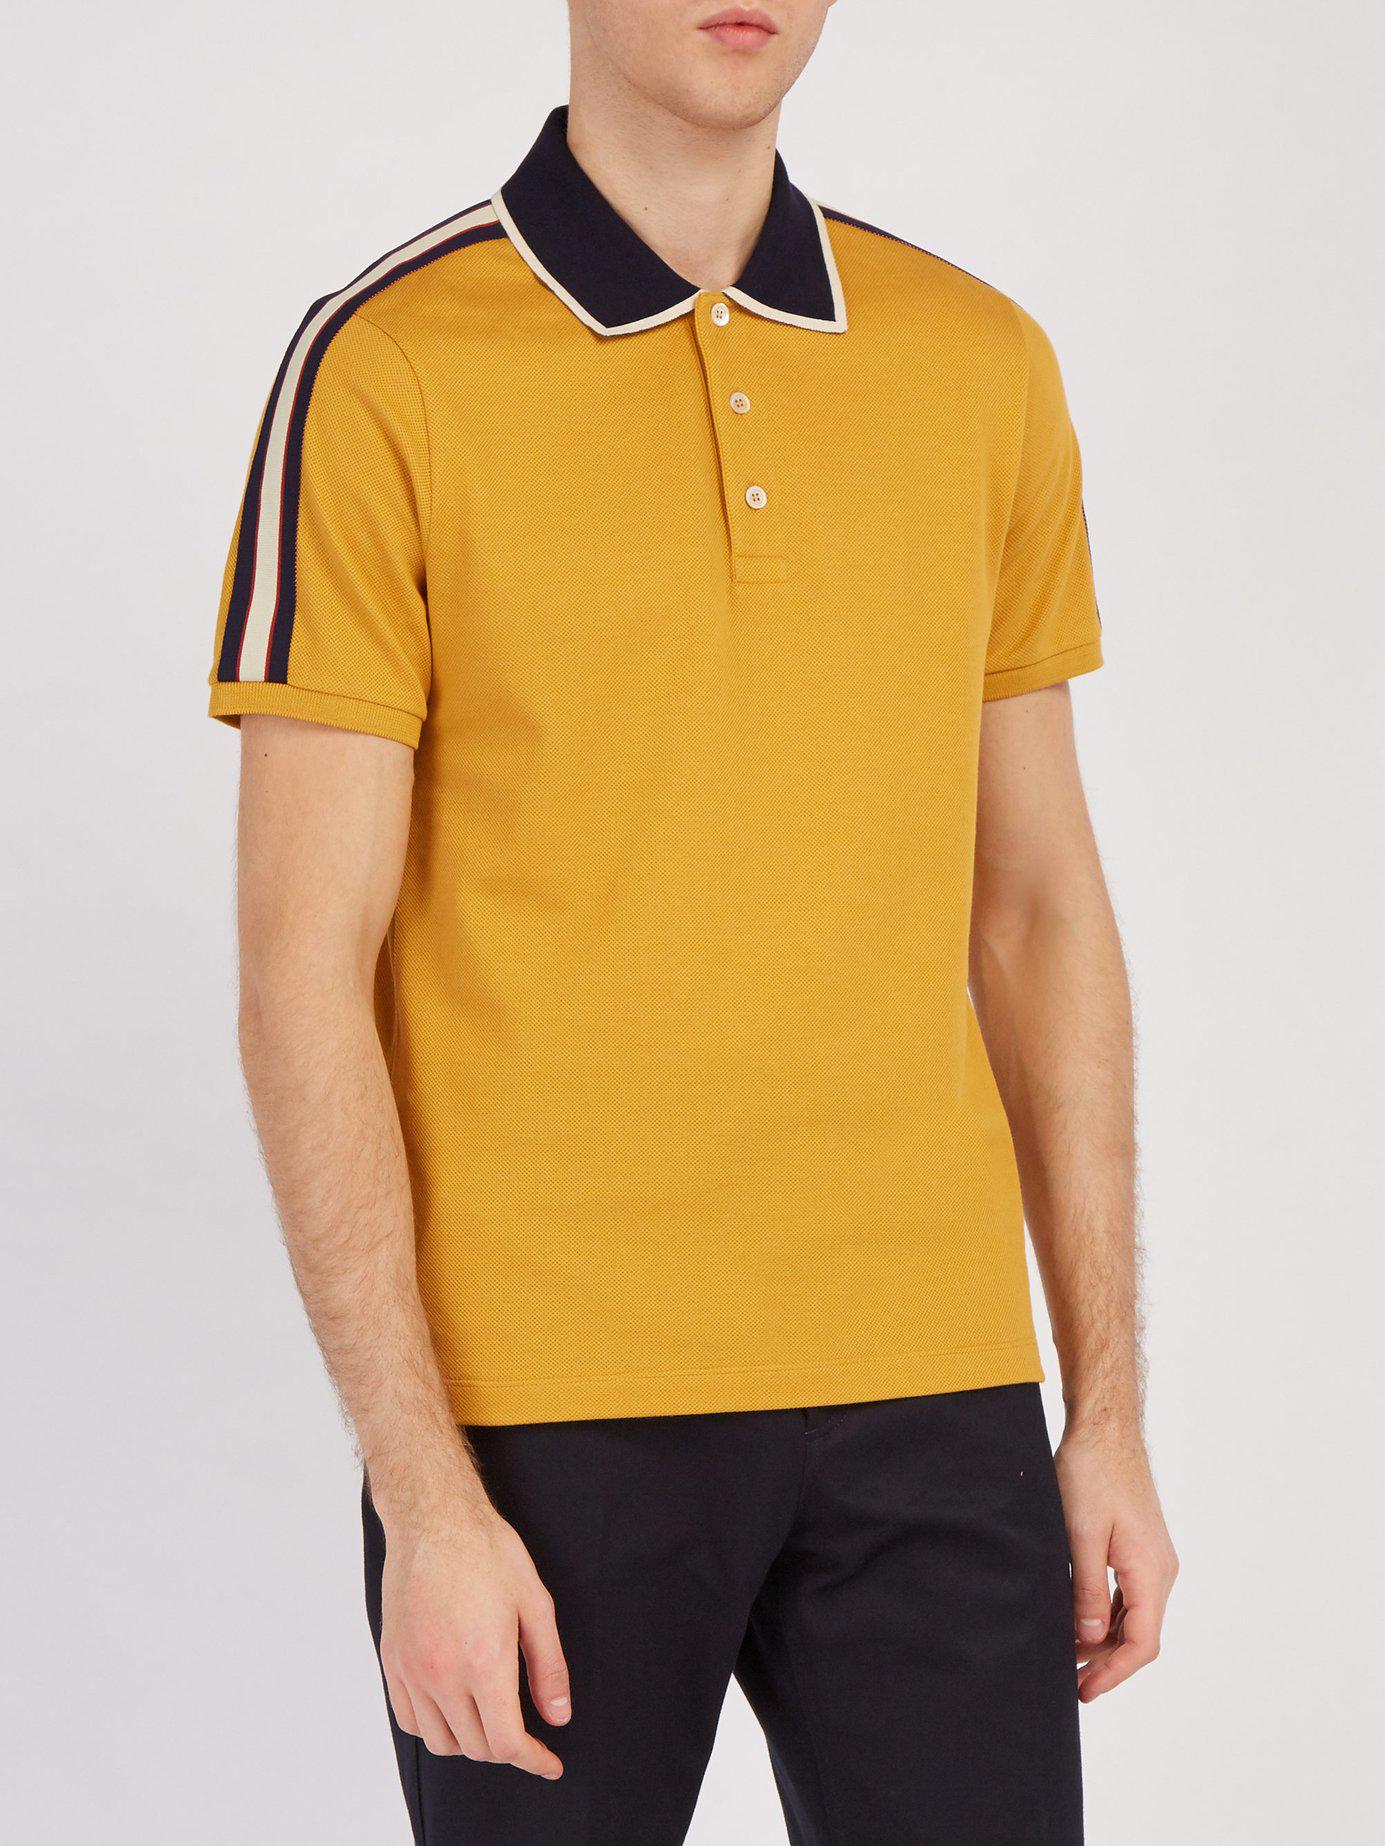 LOUIS VUITTON Logo Polo Shirts Tops #34 Stripe Cotton Yellow